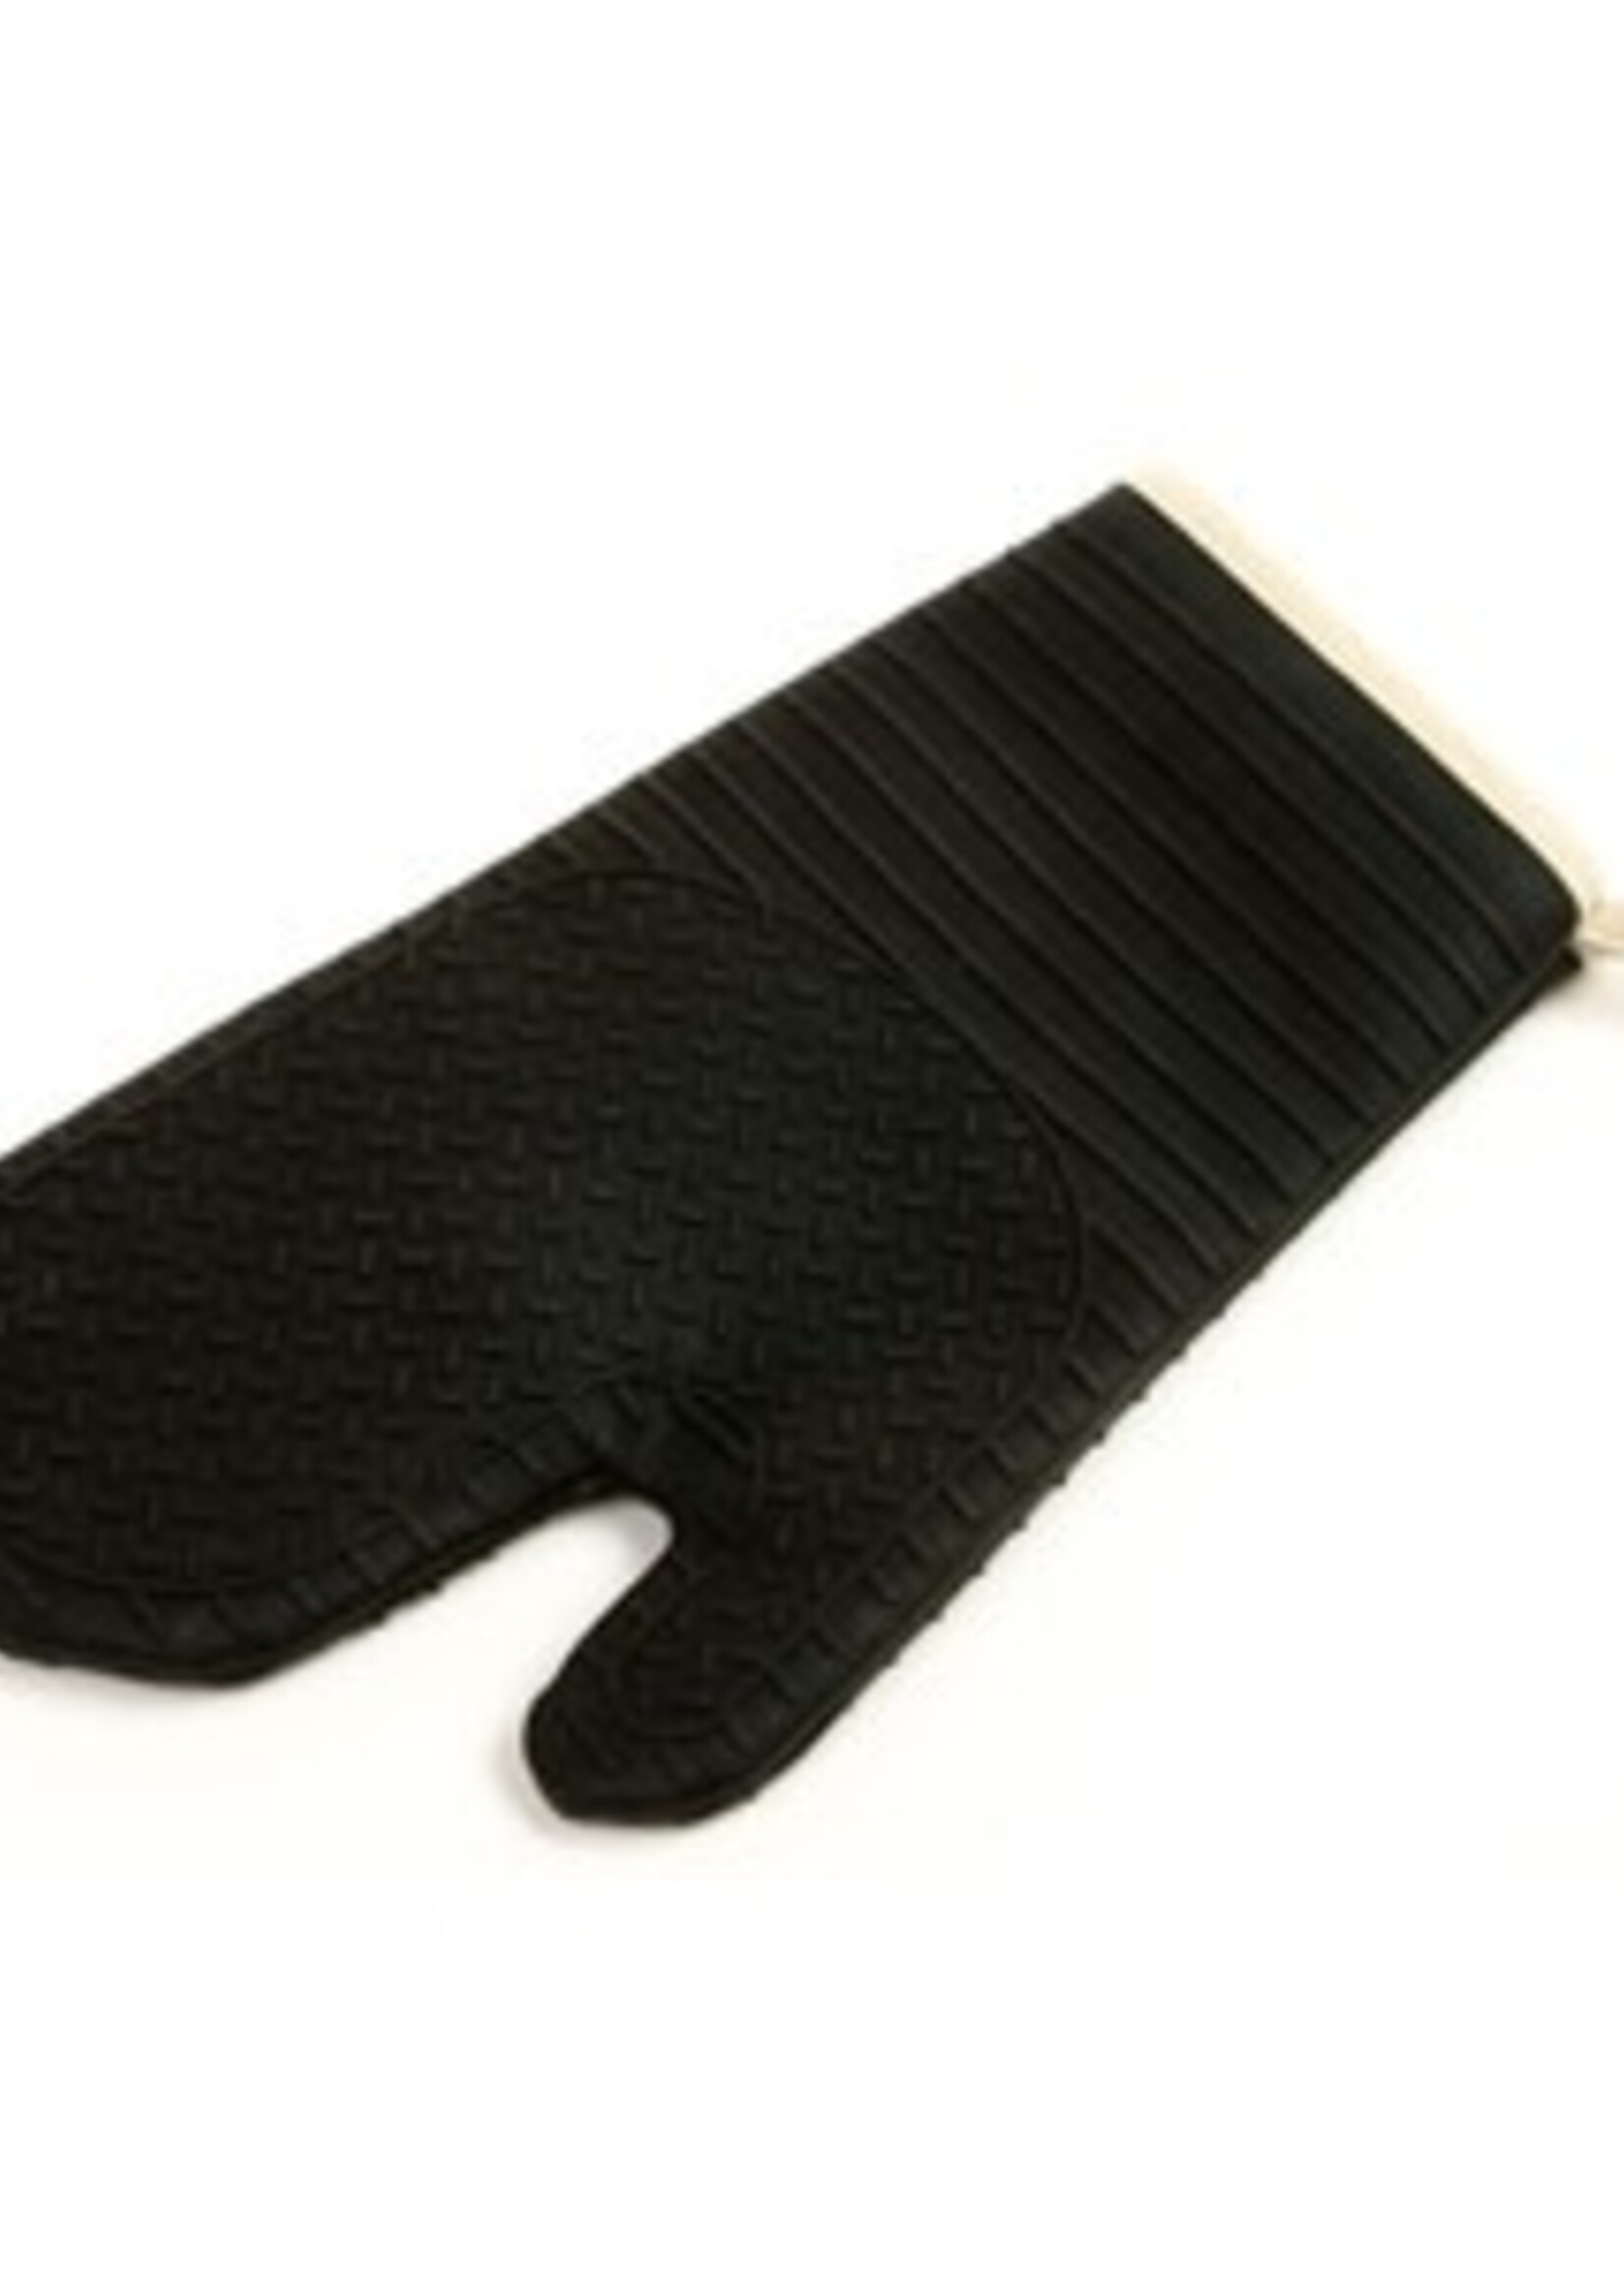 Norpro Silicone/Fabric Glove Black Large